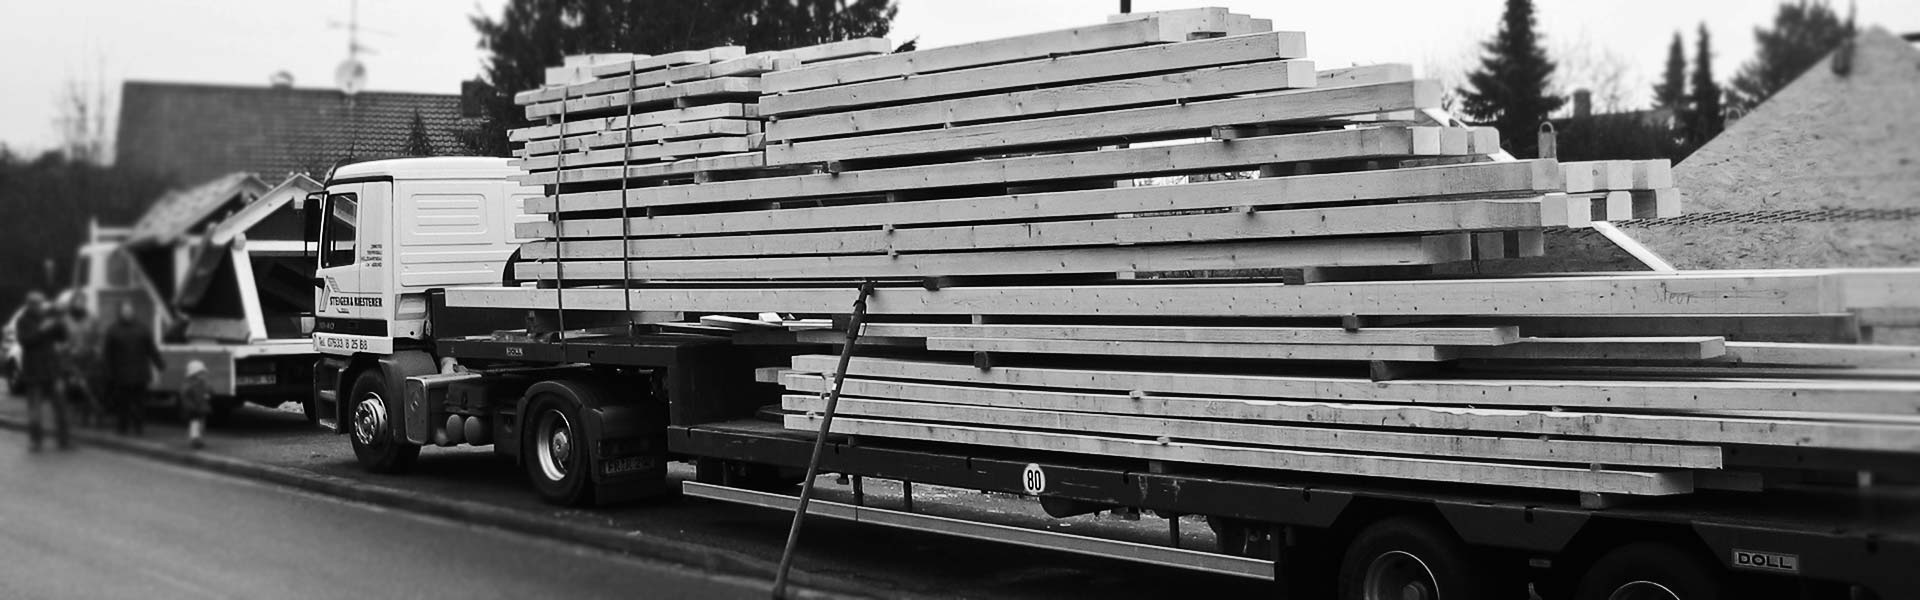 CNC- gefertigte Massivholzelemente auf Transporter Steiger & Riesterer